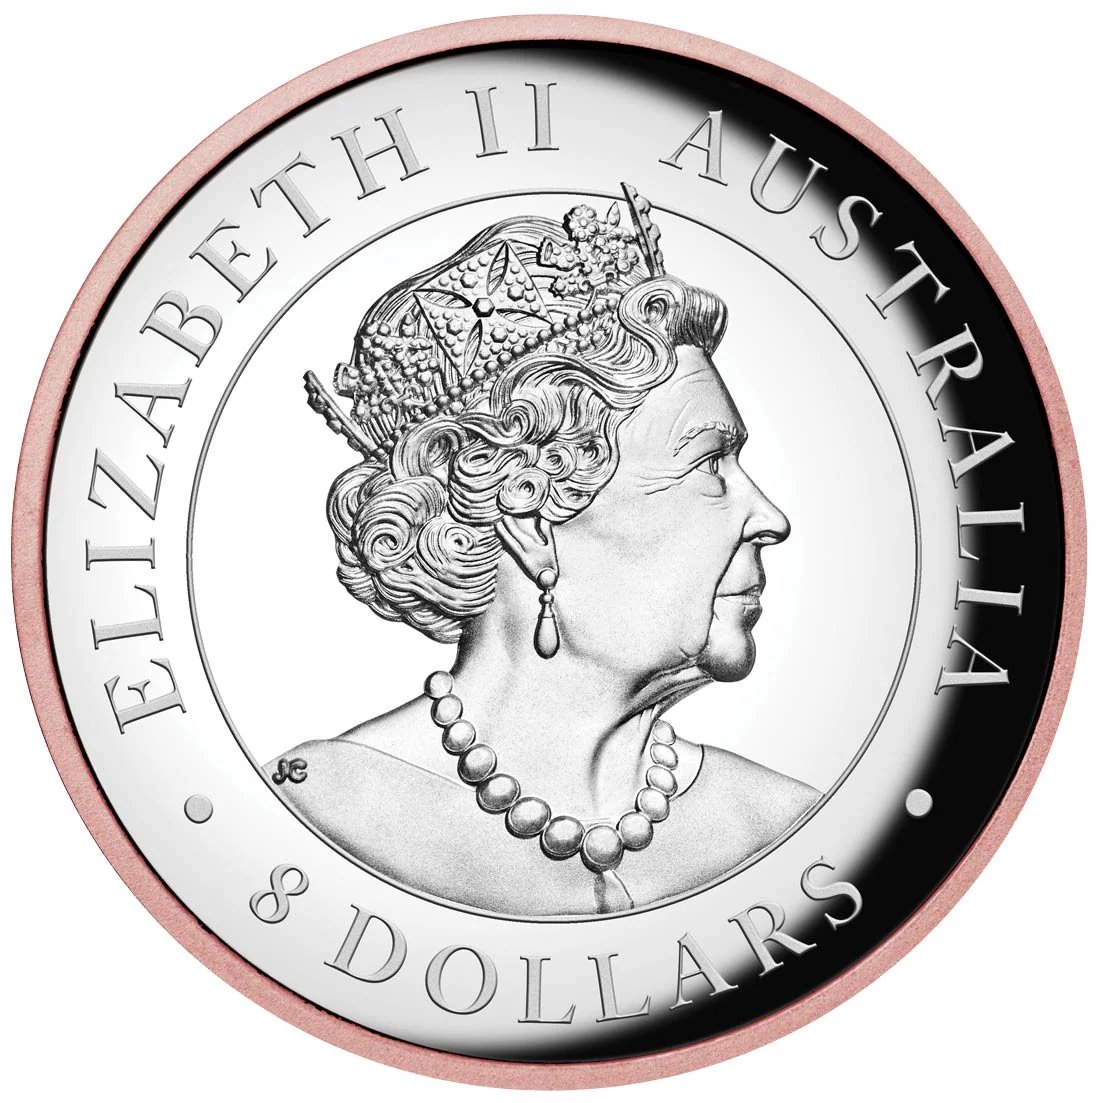 2021 $8 Australian Koala 5oz Silver Proof High Relief Gilded Coin - Obverse View